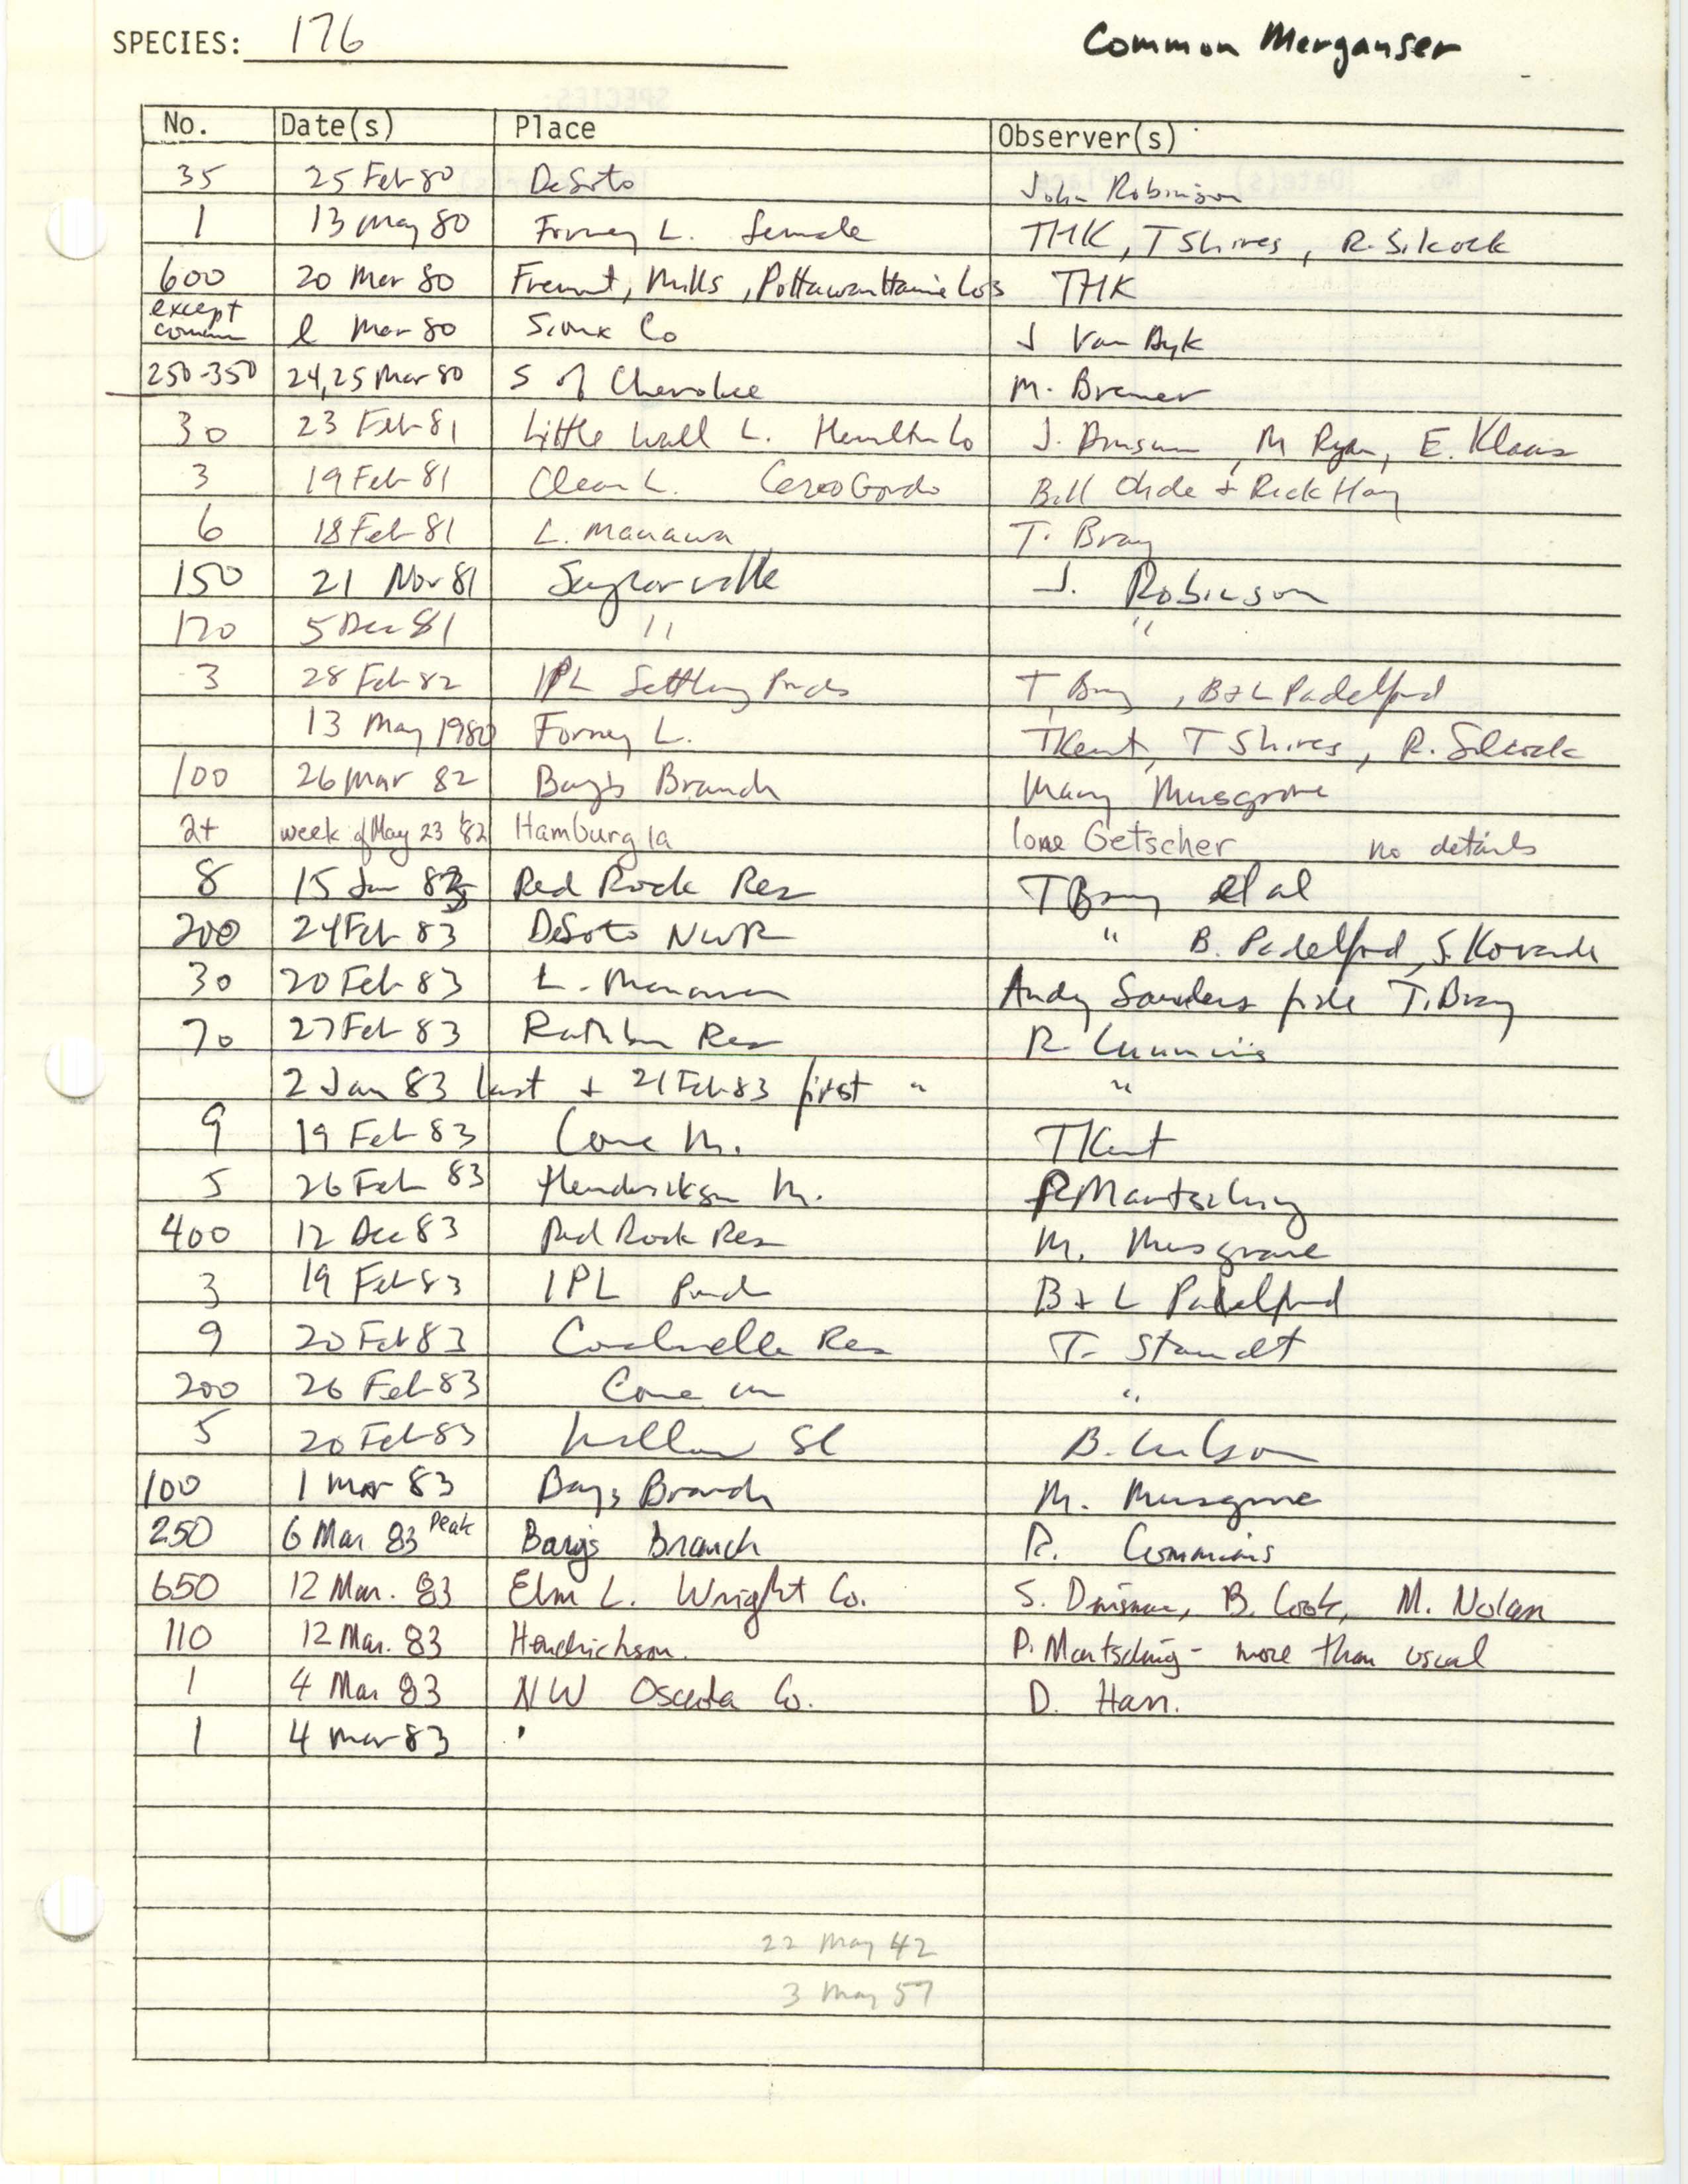 Iowa Ornithologists' Union, field report compiled data, Common Merganser, 1942-1983